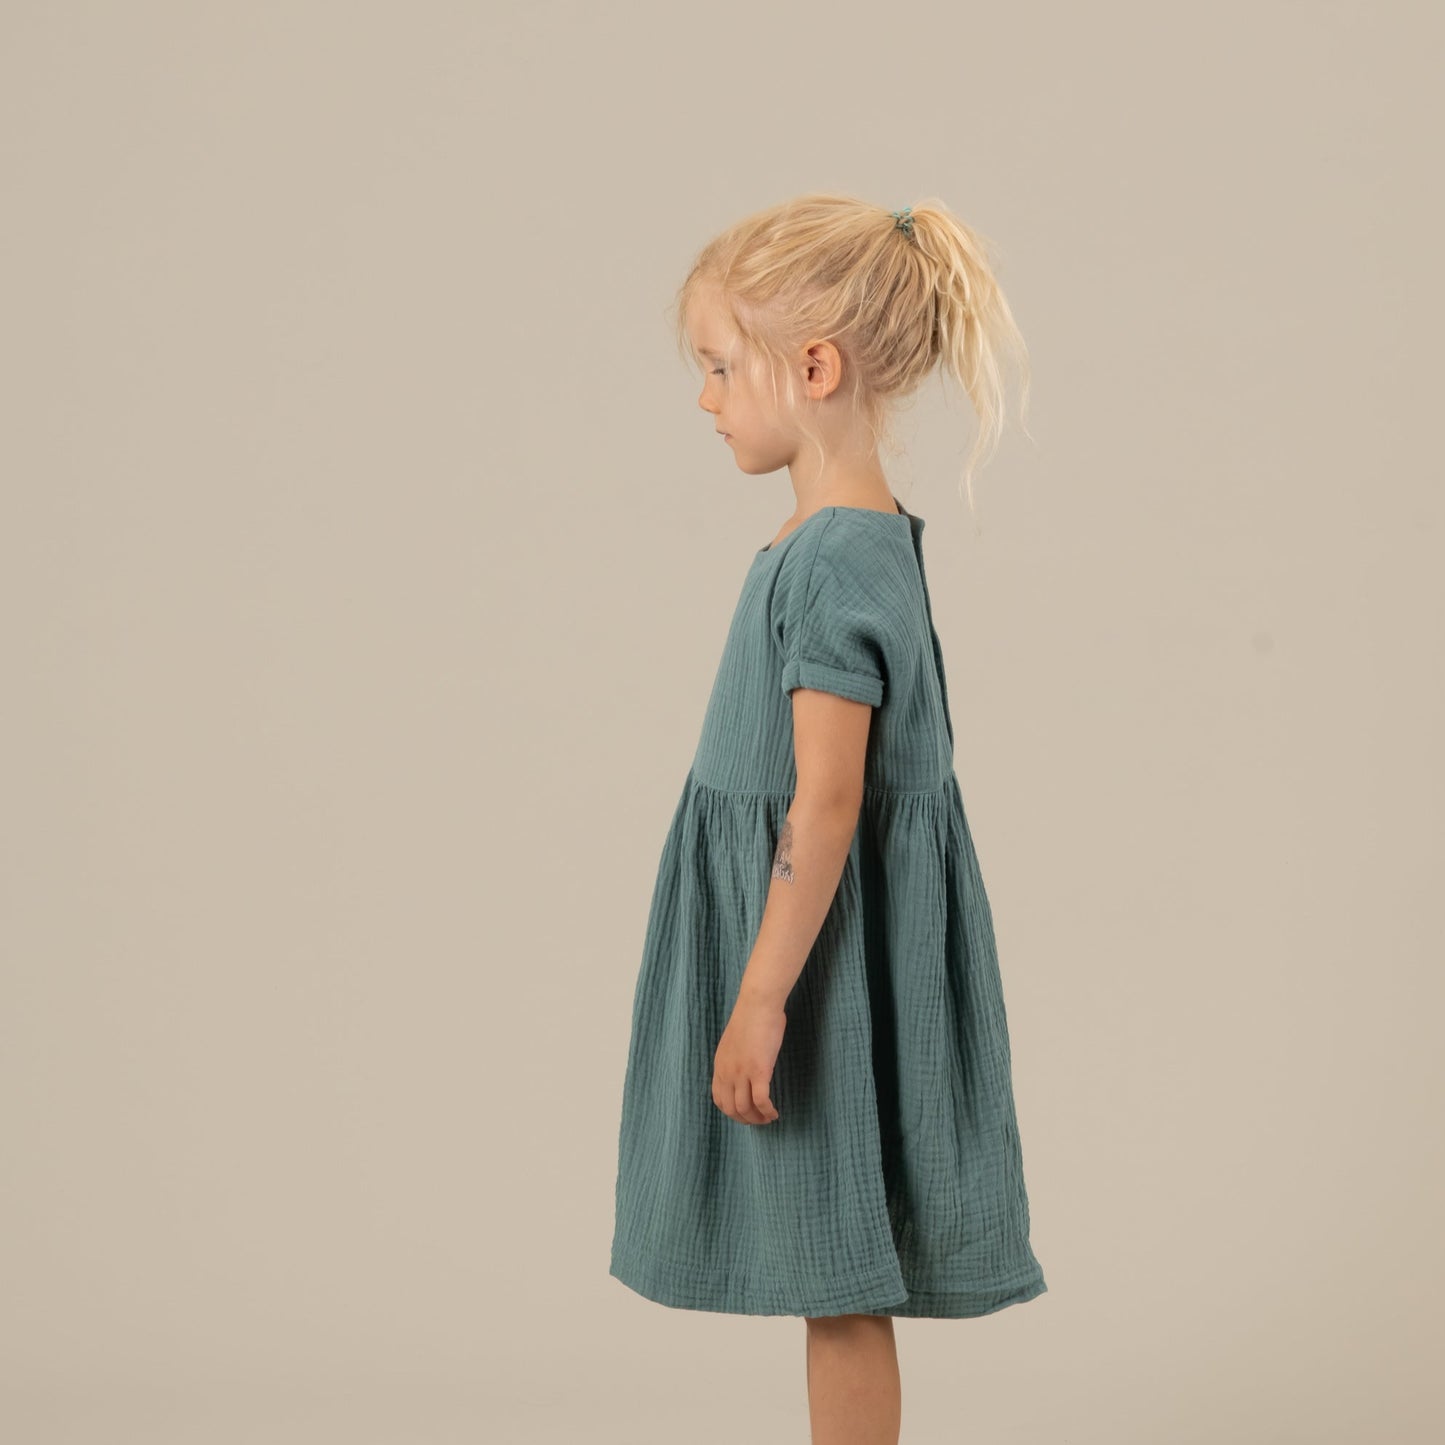 MIA Kinderkleid Musselin Petrol Seitenansicht links, Urheber: Mini & Eve